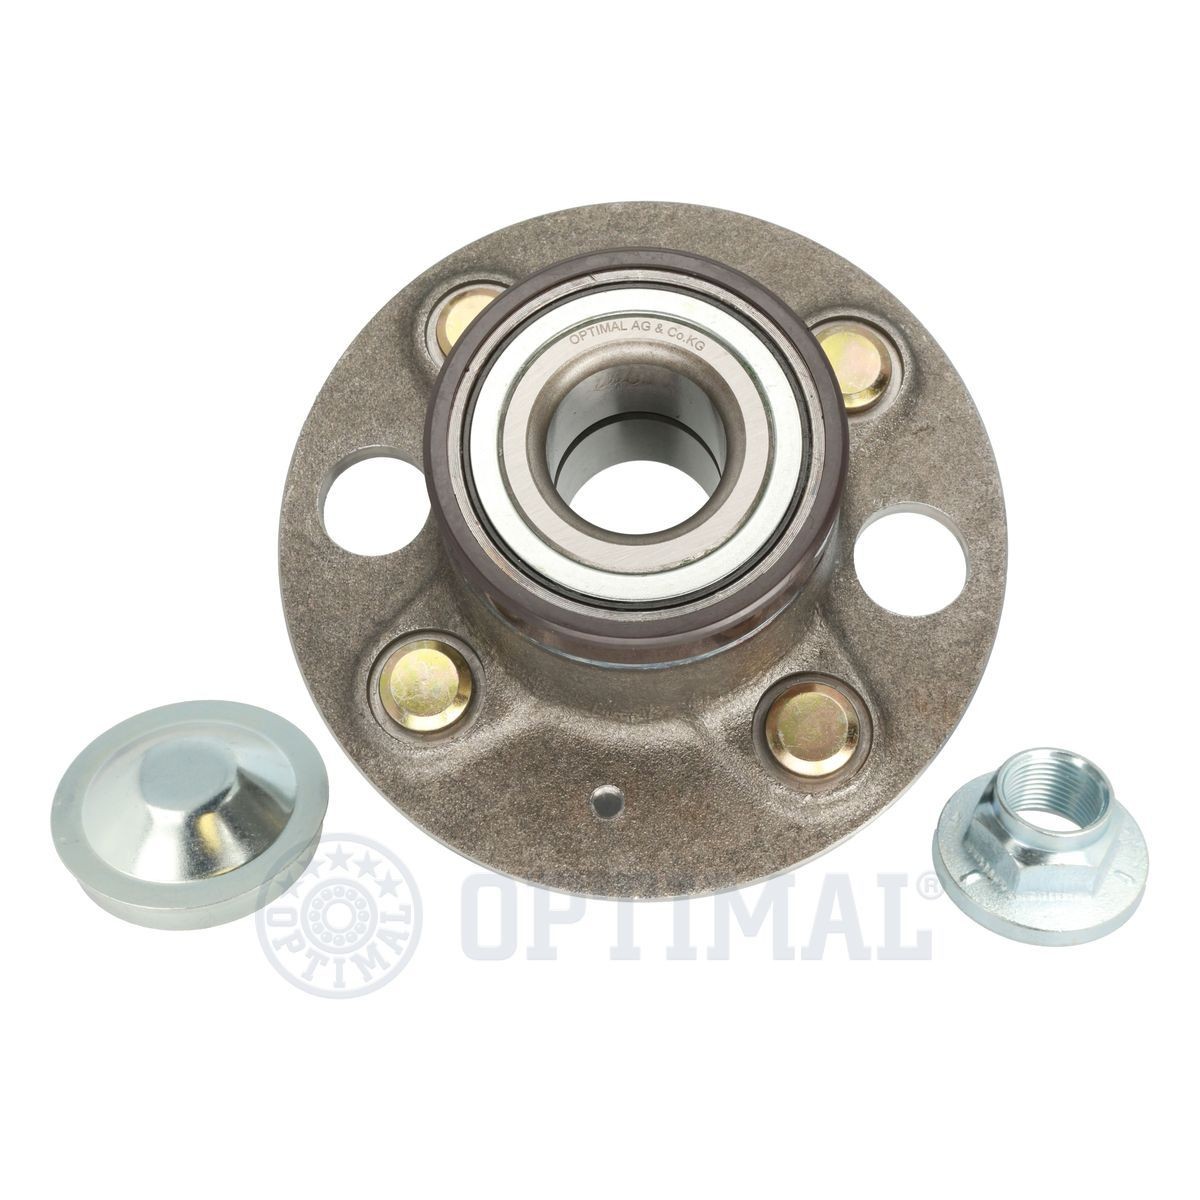 OPTIMAL 912128 Wheel bearing kit with integrated magnetic sensor ring